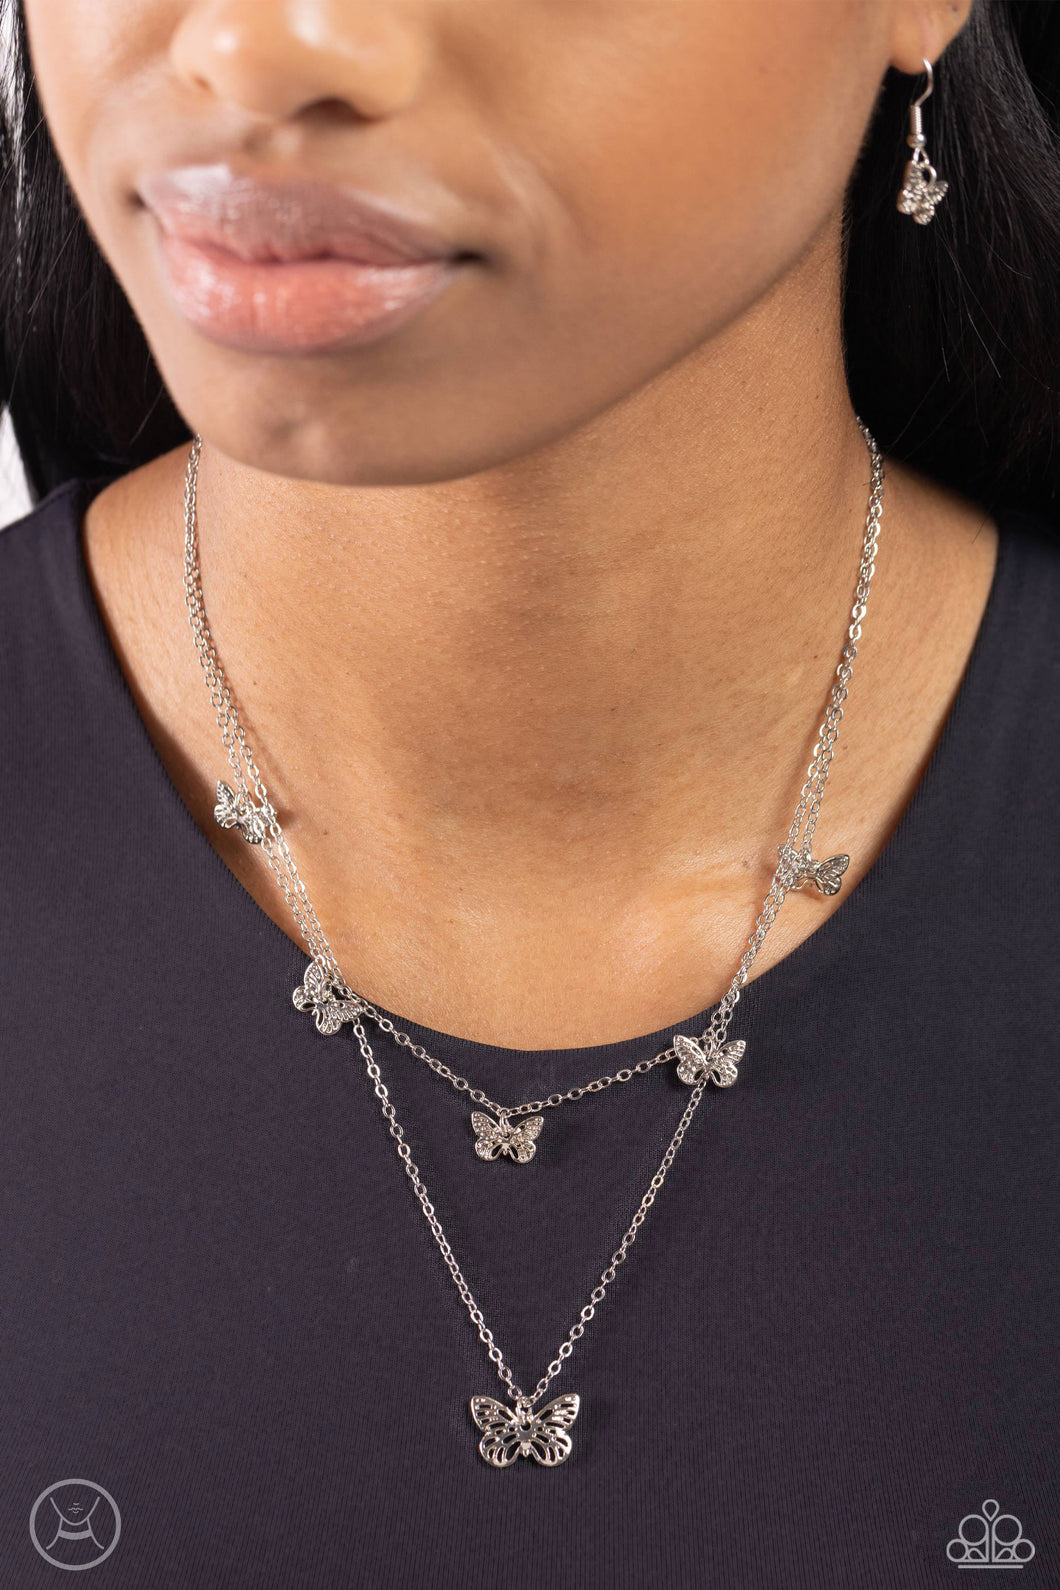 Butterfly Beacon - Silver Choker Necklace